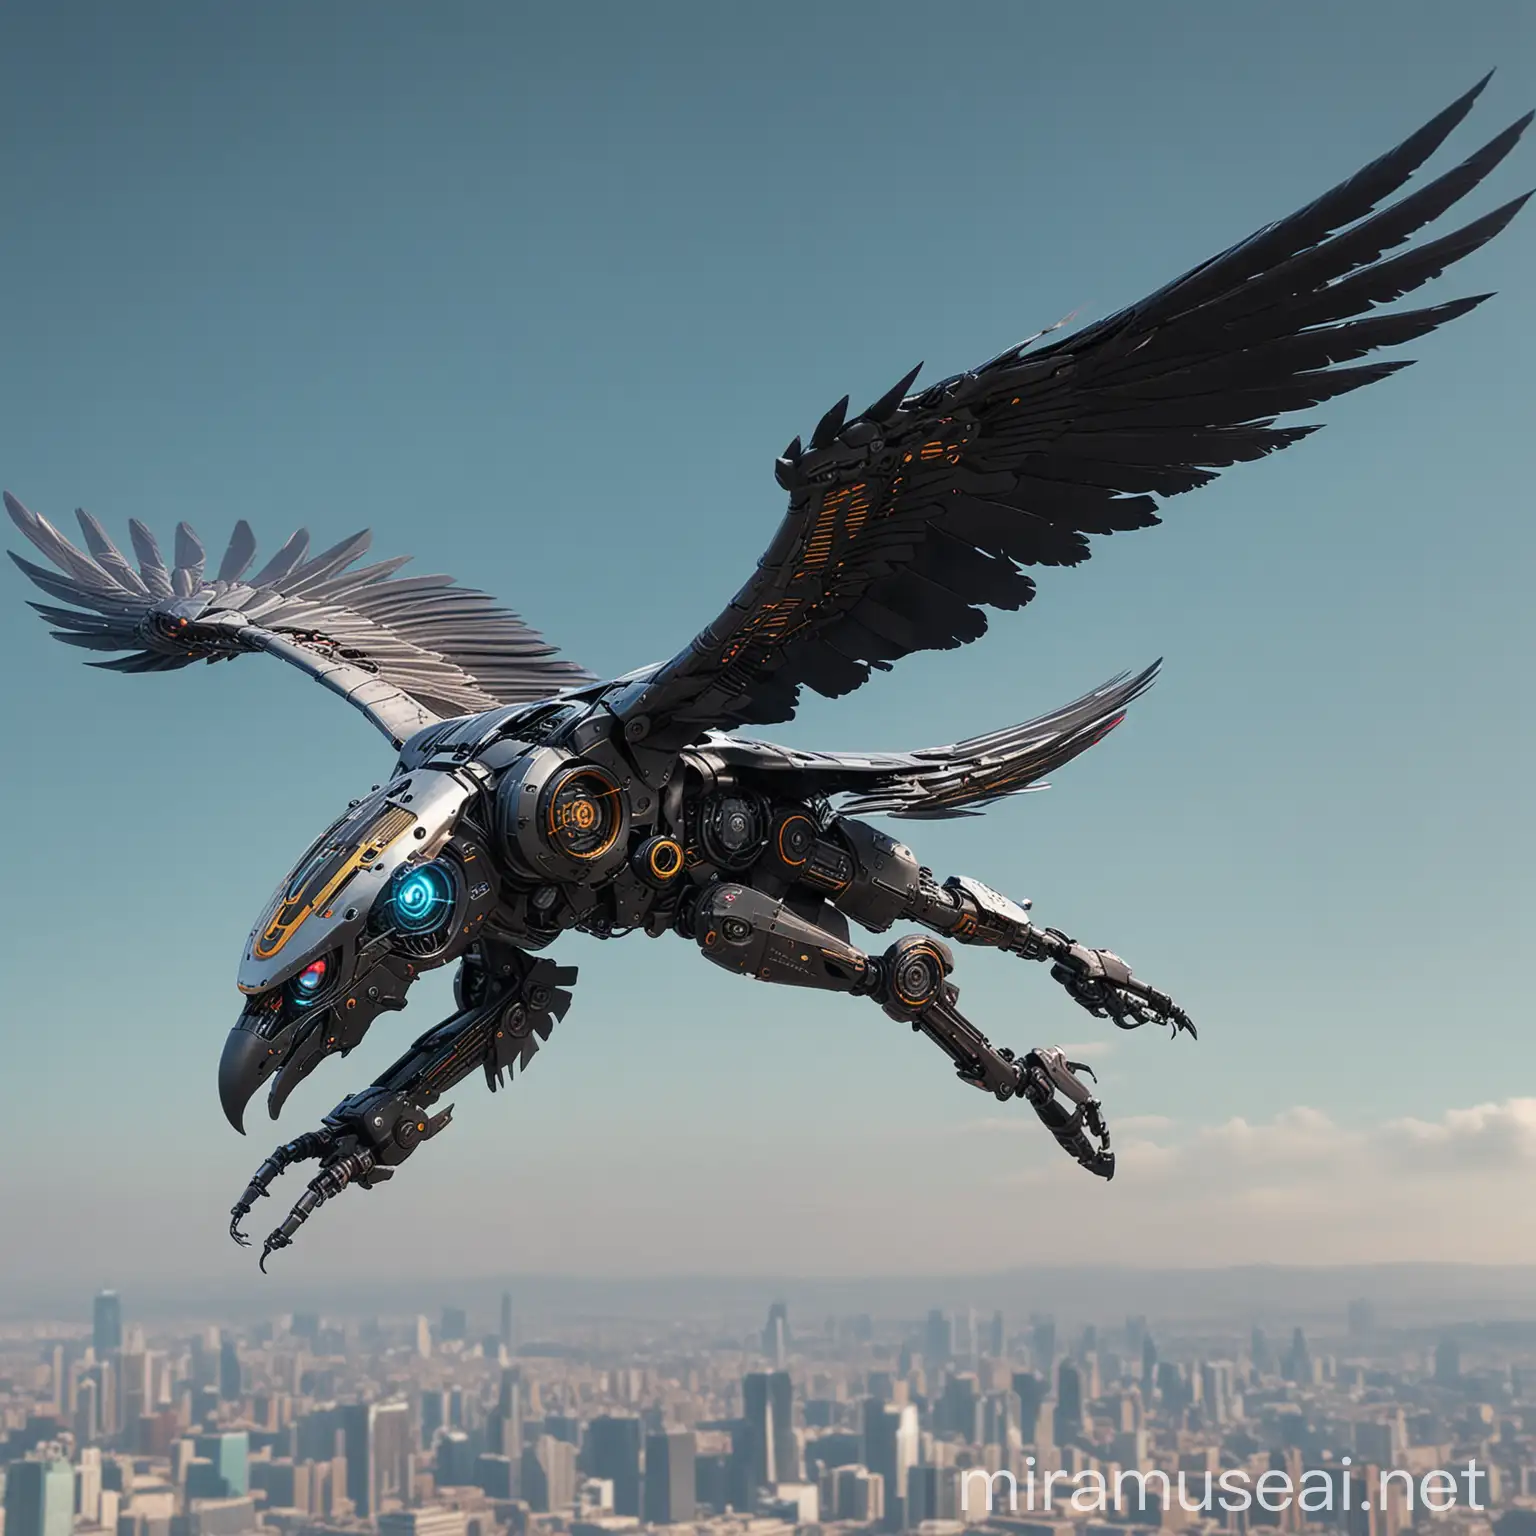 Cyberpunk Style Robotic Black Eagle in Full Flight